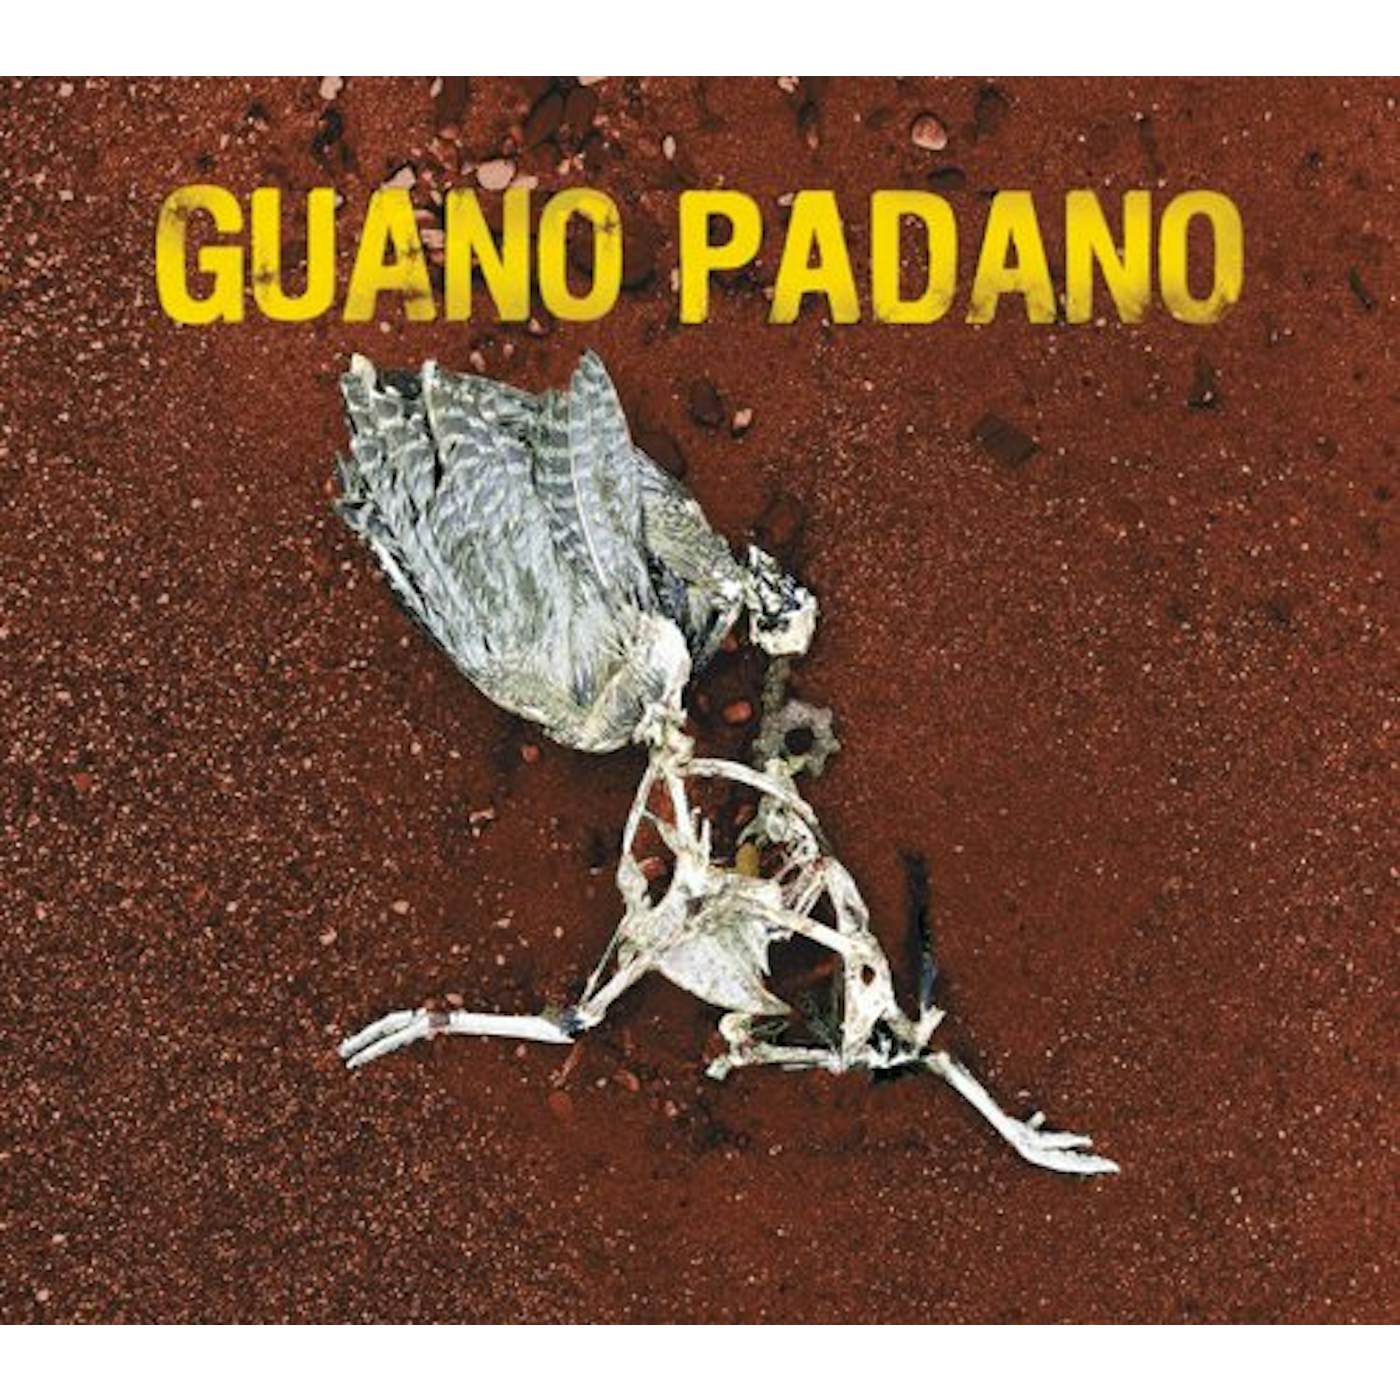 Guano Padano Vinyl Record